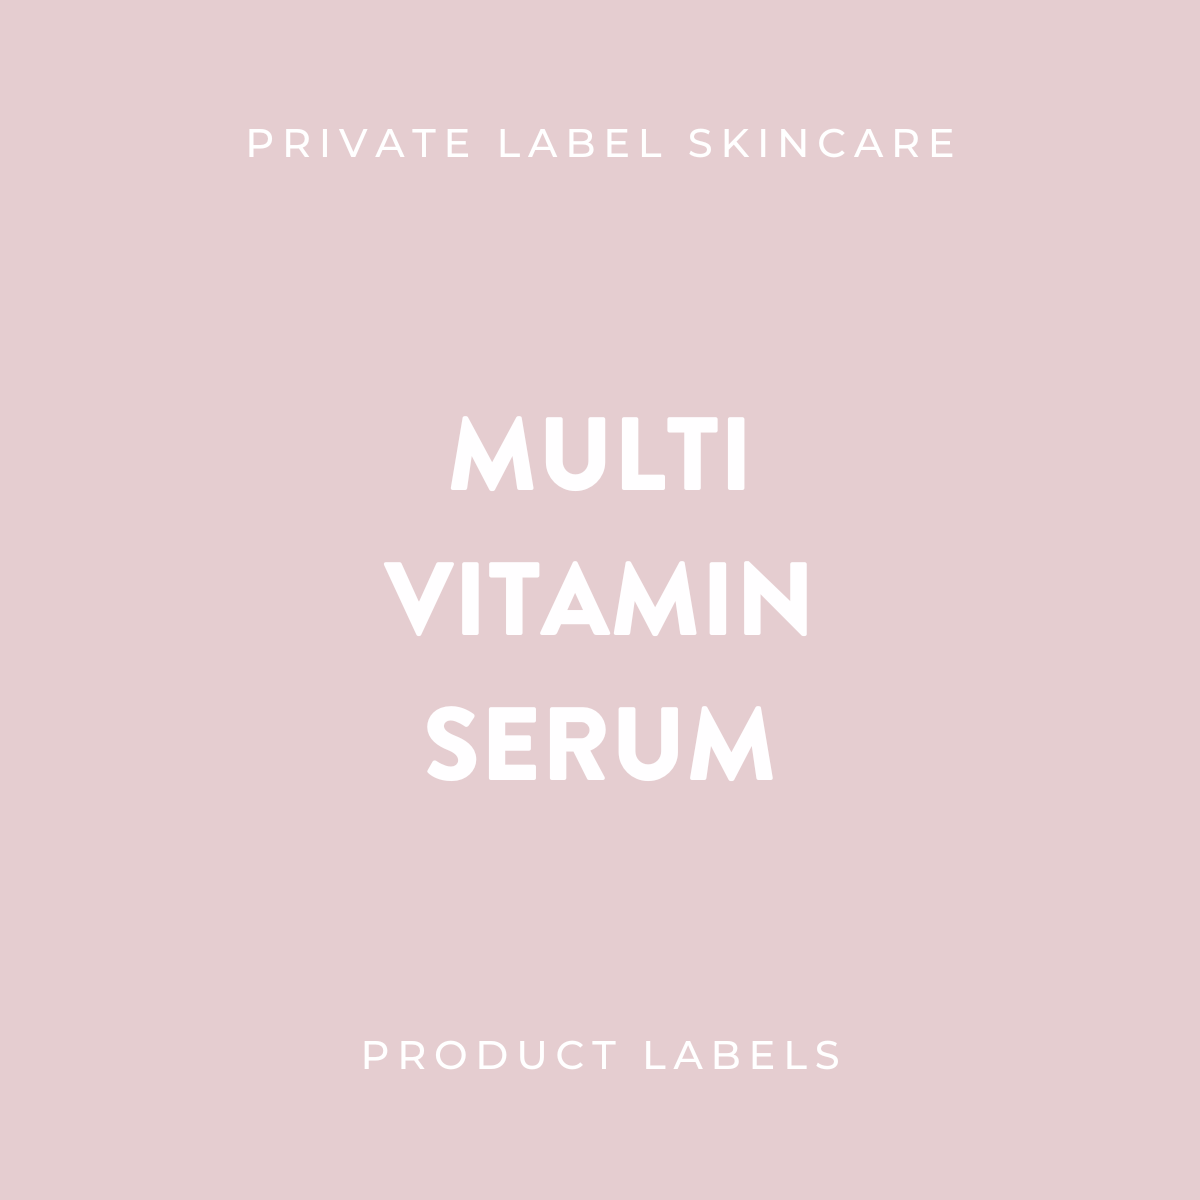 Multi Vitamin Serum Product Labels (x 20 labels)